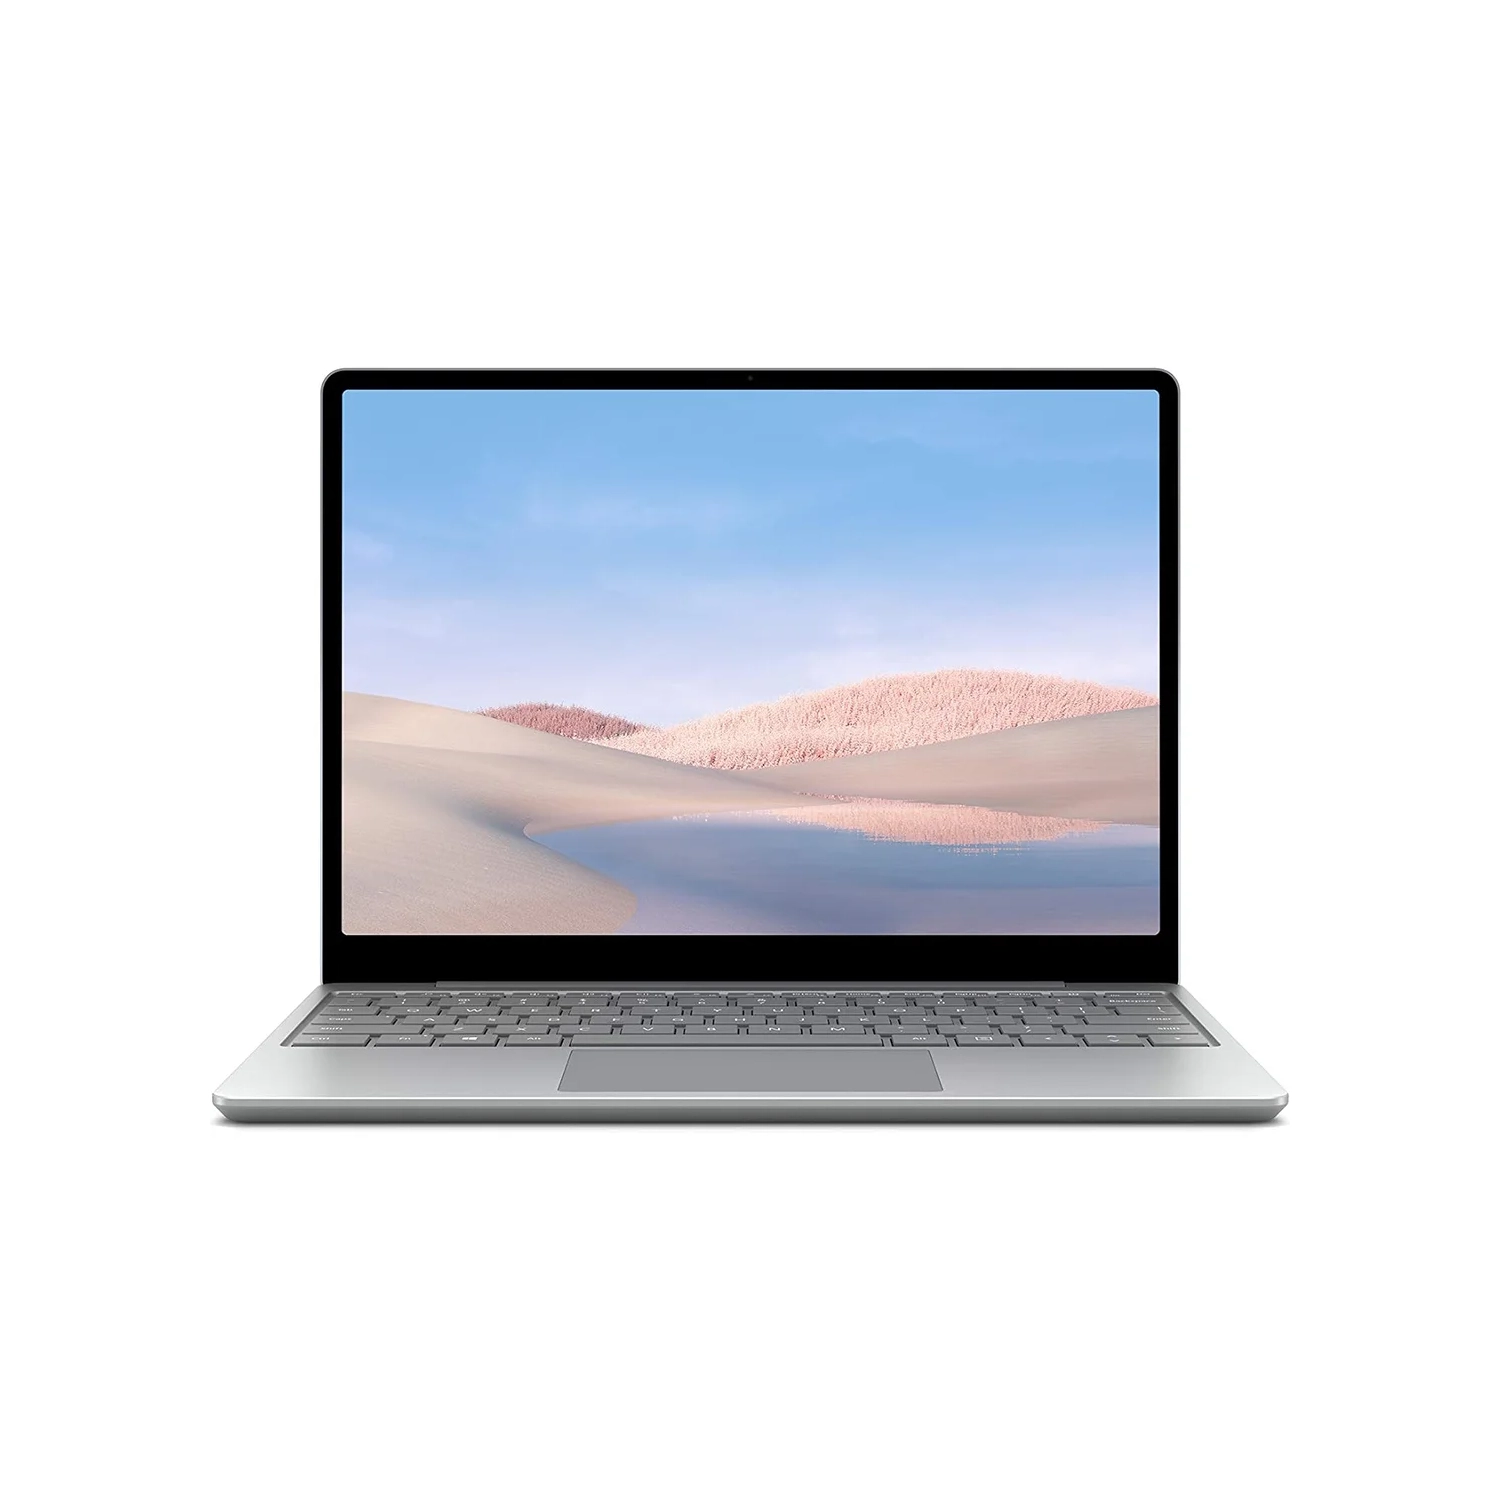 Refurbished (Good) - Microsoft Surface Laptop Go, Intel Core i5-1035G1, 12.4" Touchscreen, 16GB, 256GB SSD, Webcam, Win10 Pro, USB-C, Model: 1943